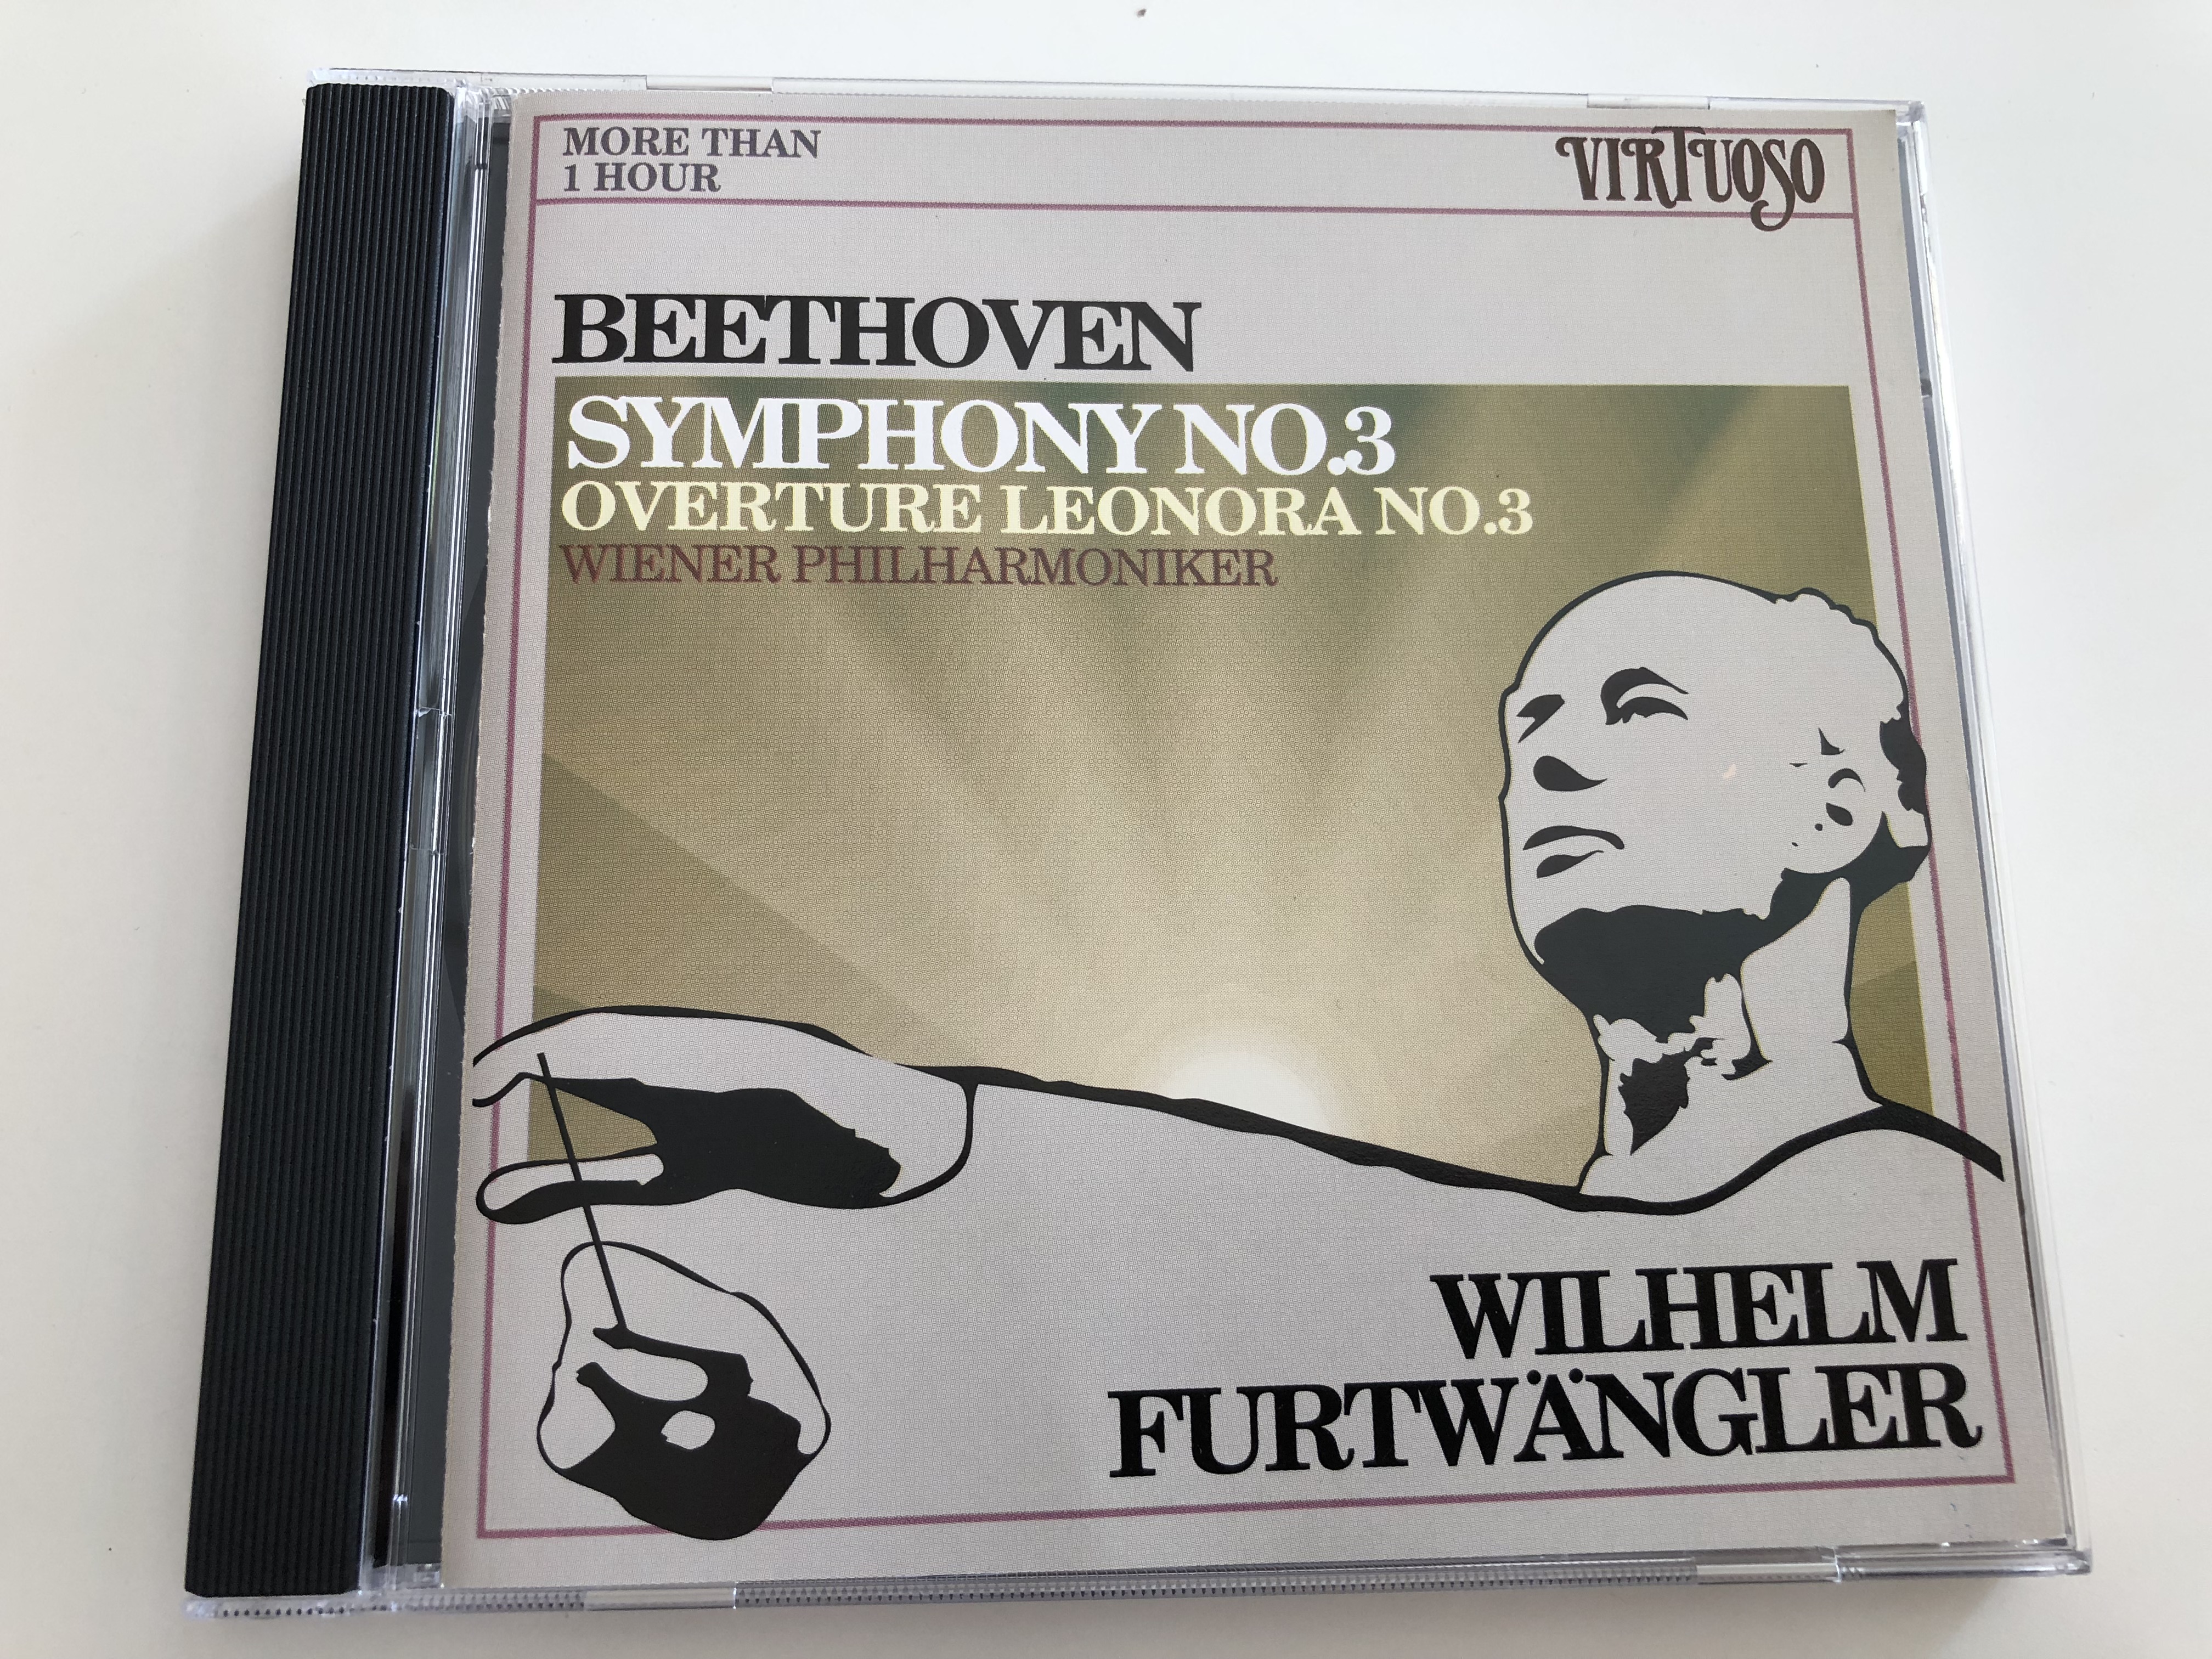 beethoven-symphony-no.-3-overture-leonora-no.-3-wiener-philharmoniker-conducted-by-wilhelm-furtw-ngler-virtuoso-audio-cd-1989-1-.jpg